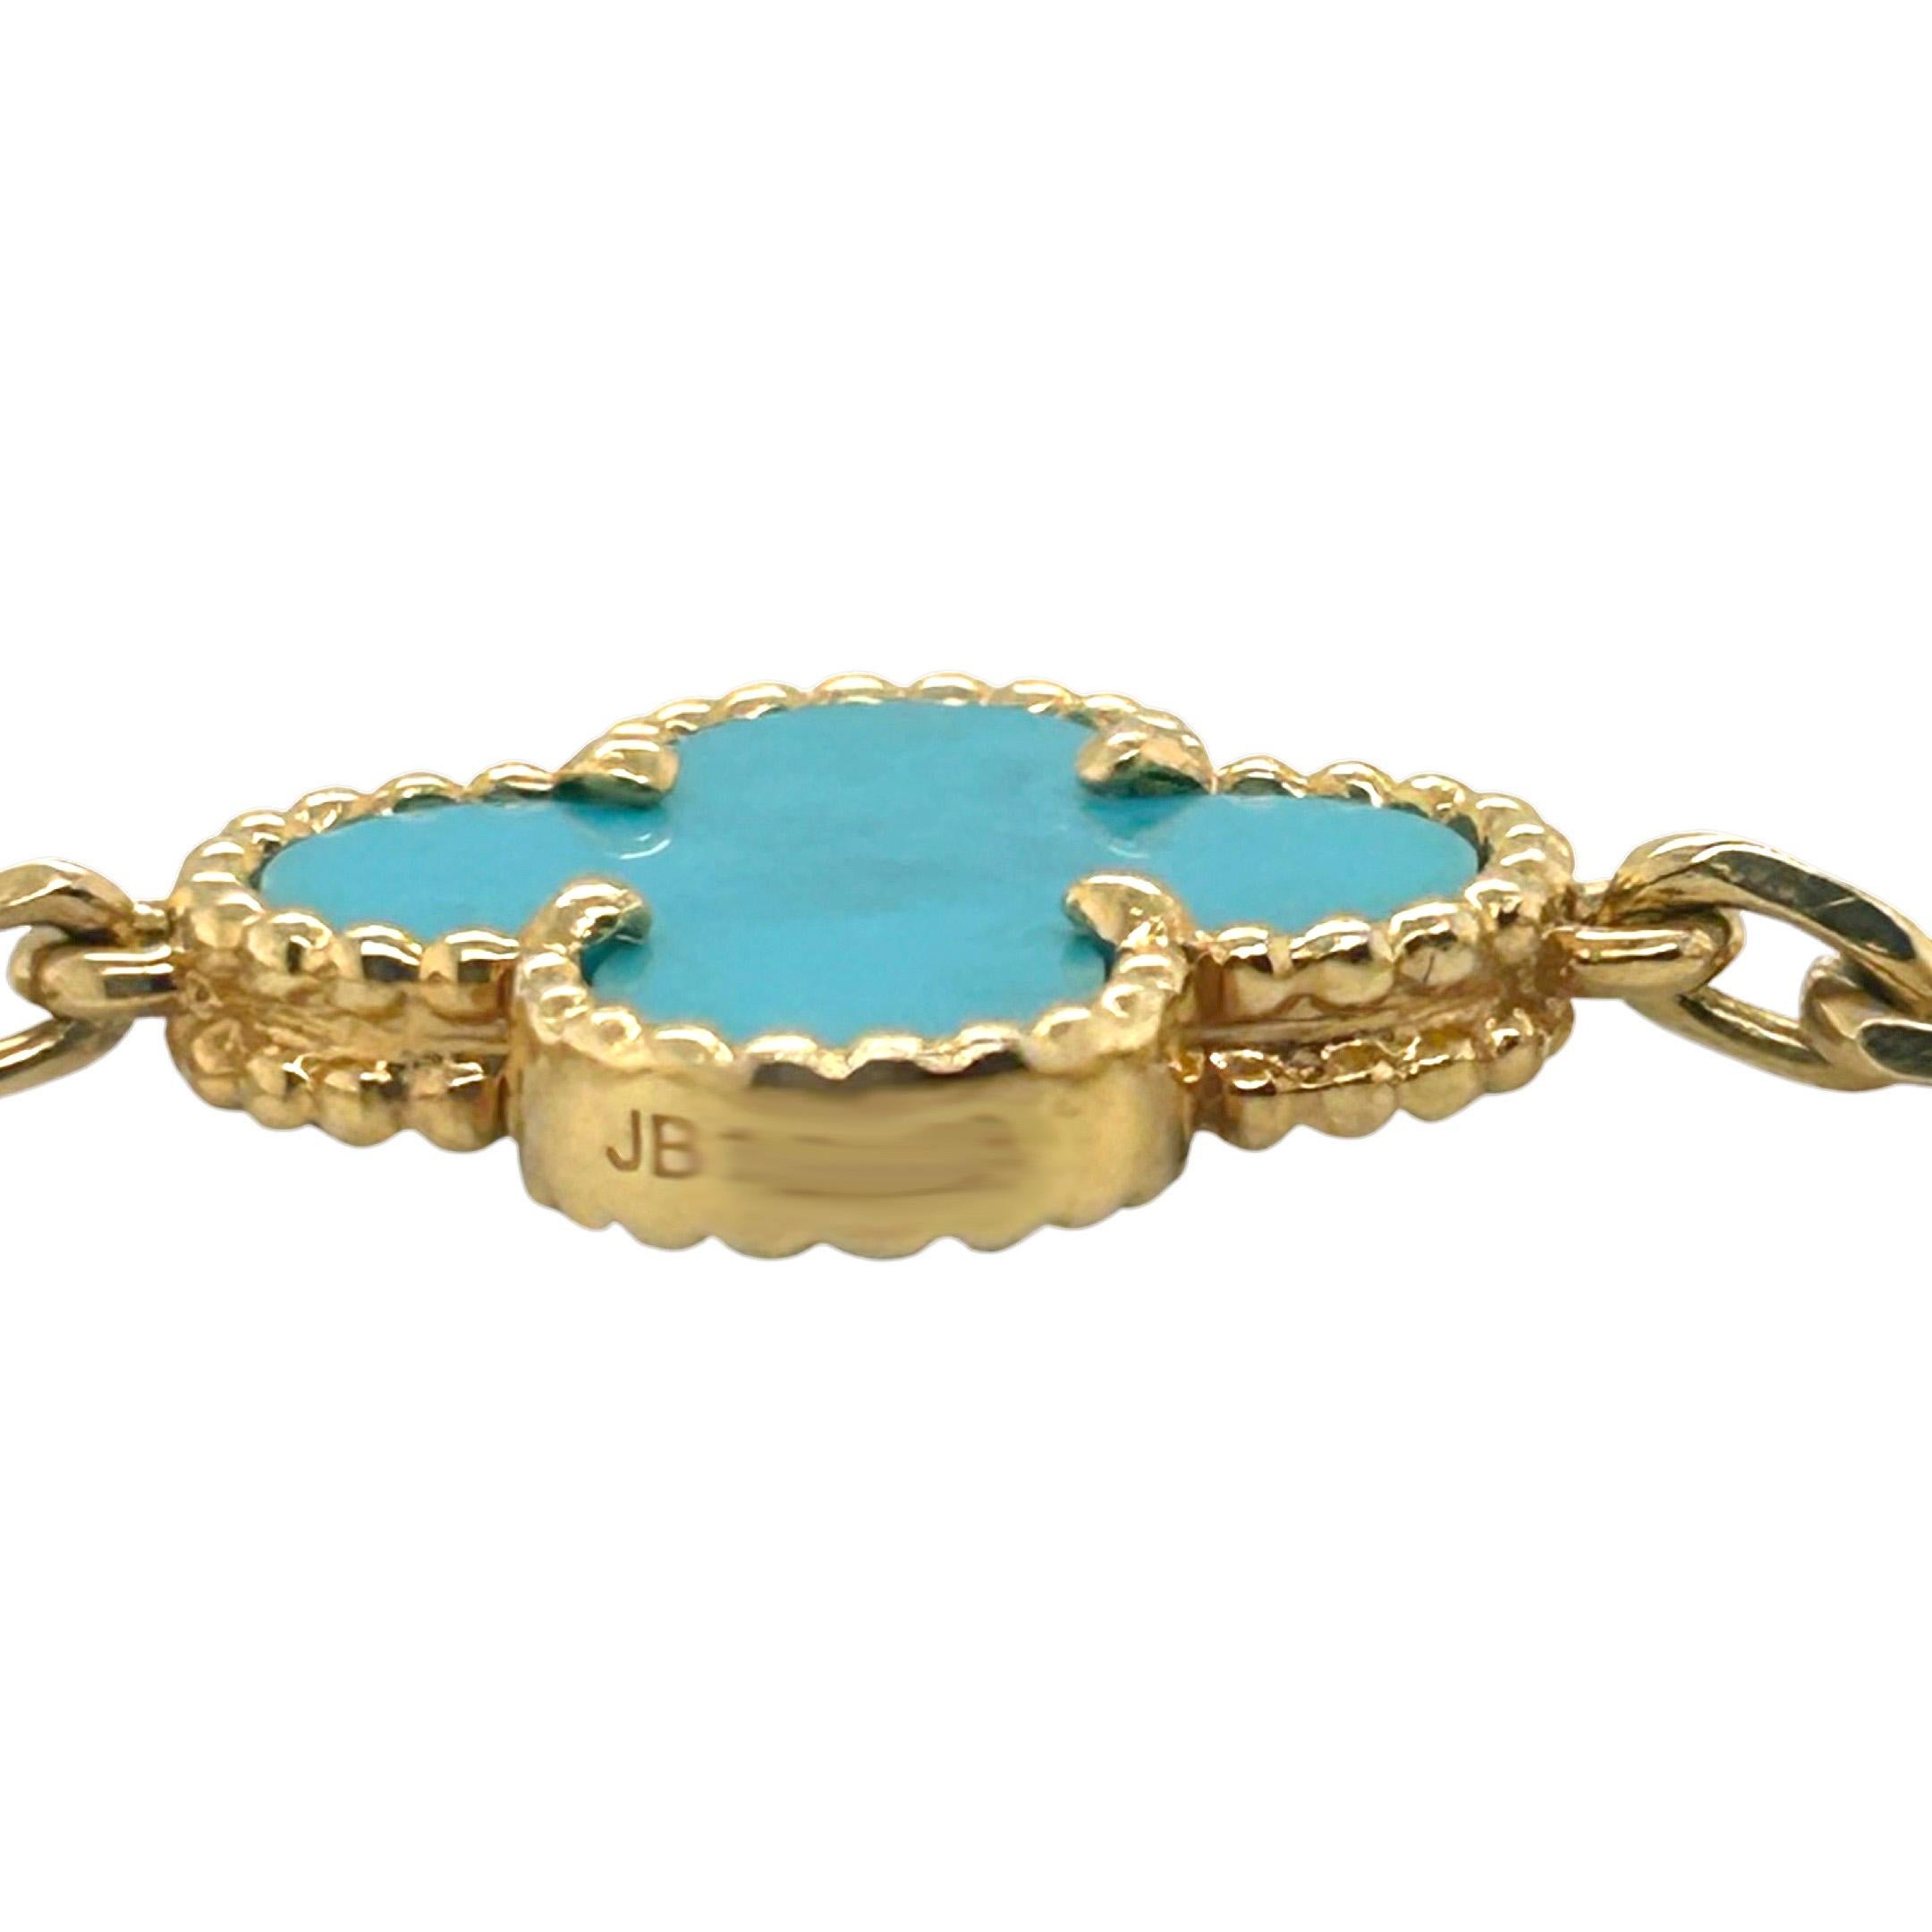 Designer:  Van Cleef & Arpels 

Collection:  Vintage Alhambra

Style: Bracelet

​​​​​​​Bracelet Motifs: 5

Stone: Turquoise

Metal Type: Yellow Gold  

Metal Purity: 18K 

Hallmarks: VCA; Serial #

​Includes: 24-Month Brilliance Jewels Warranty

   